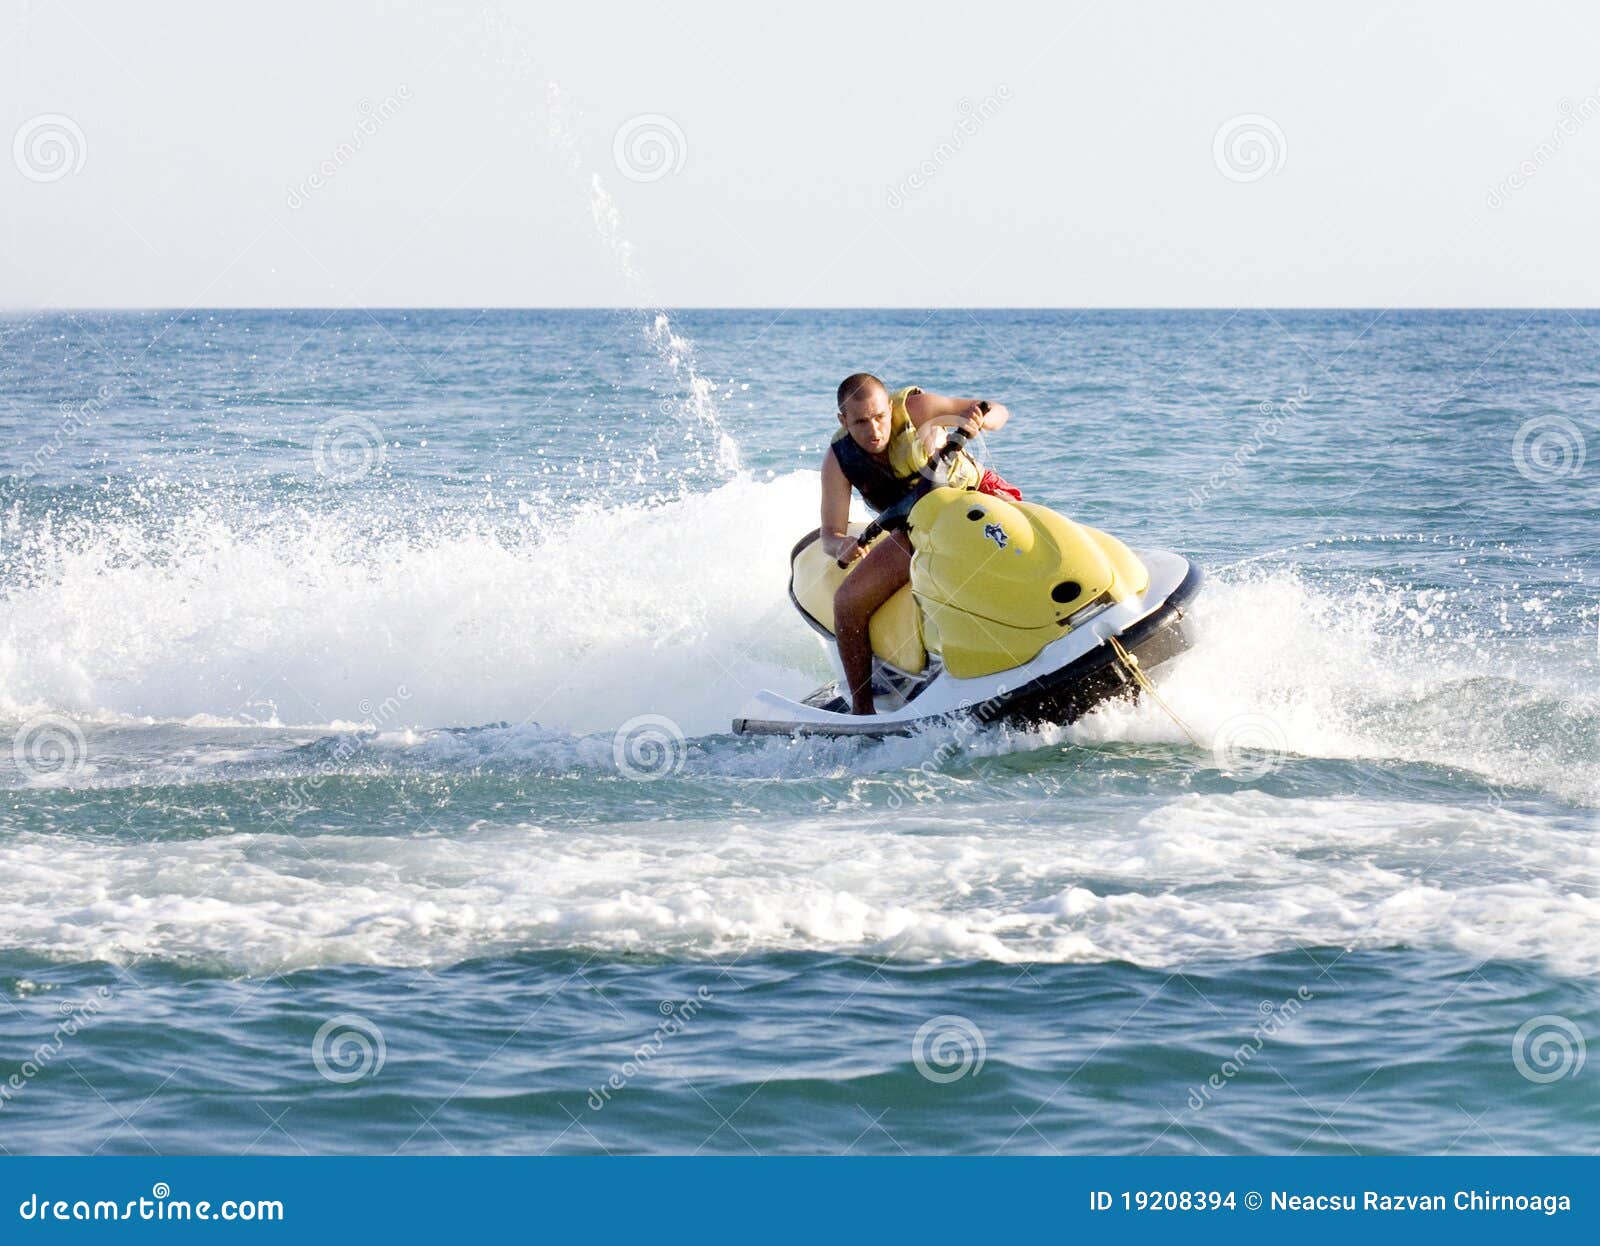 Man On A Jet Ski Stock Images - Image: 19208394